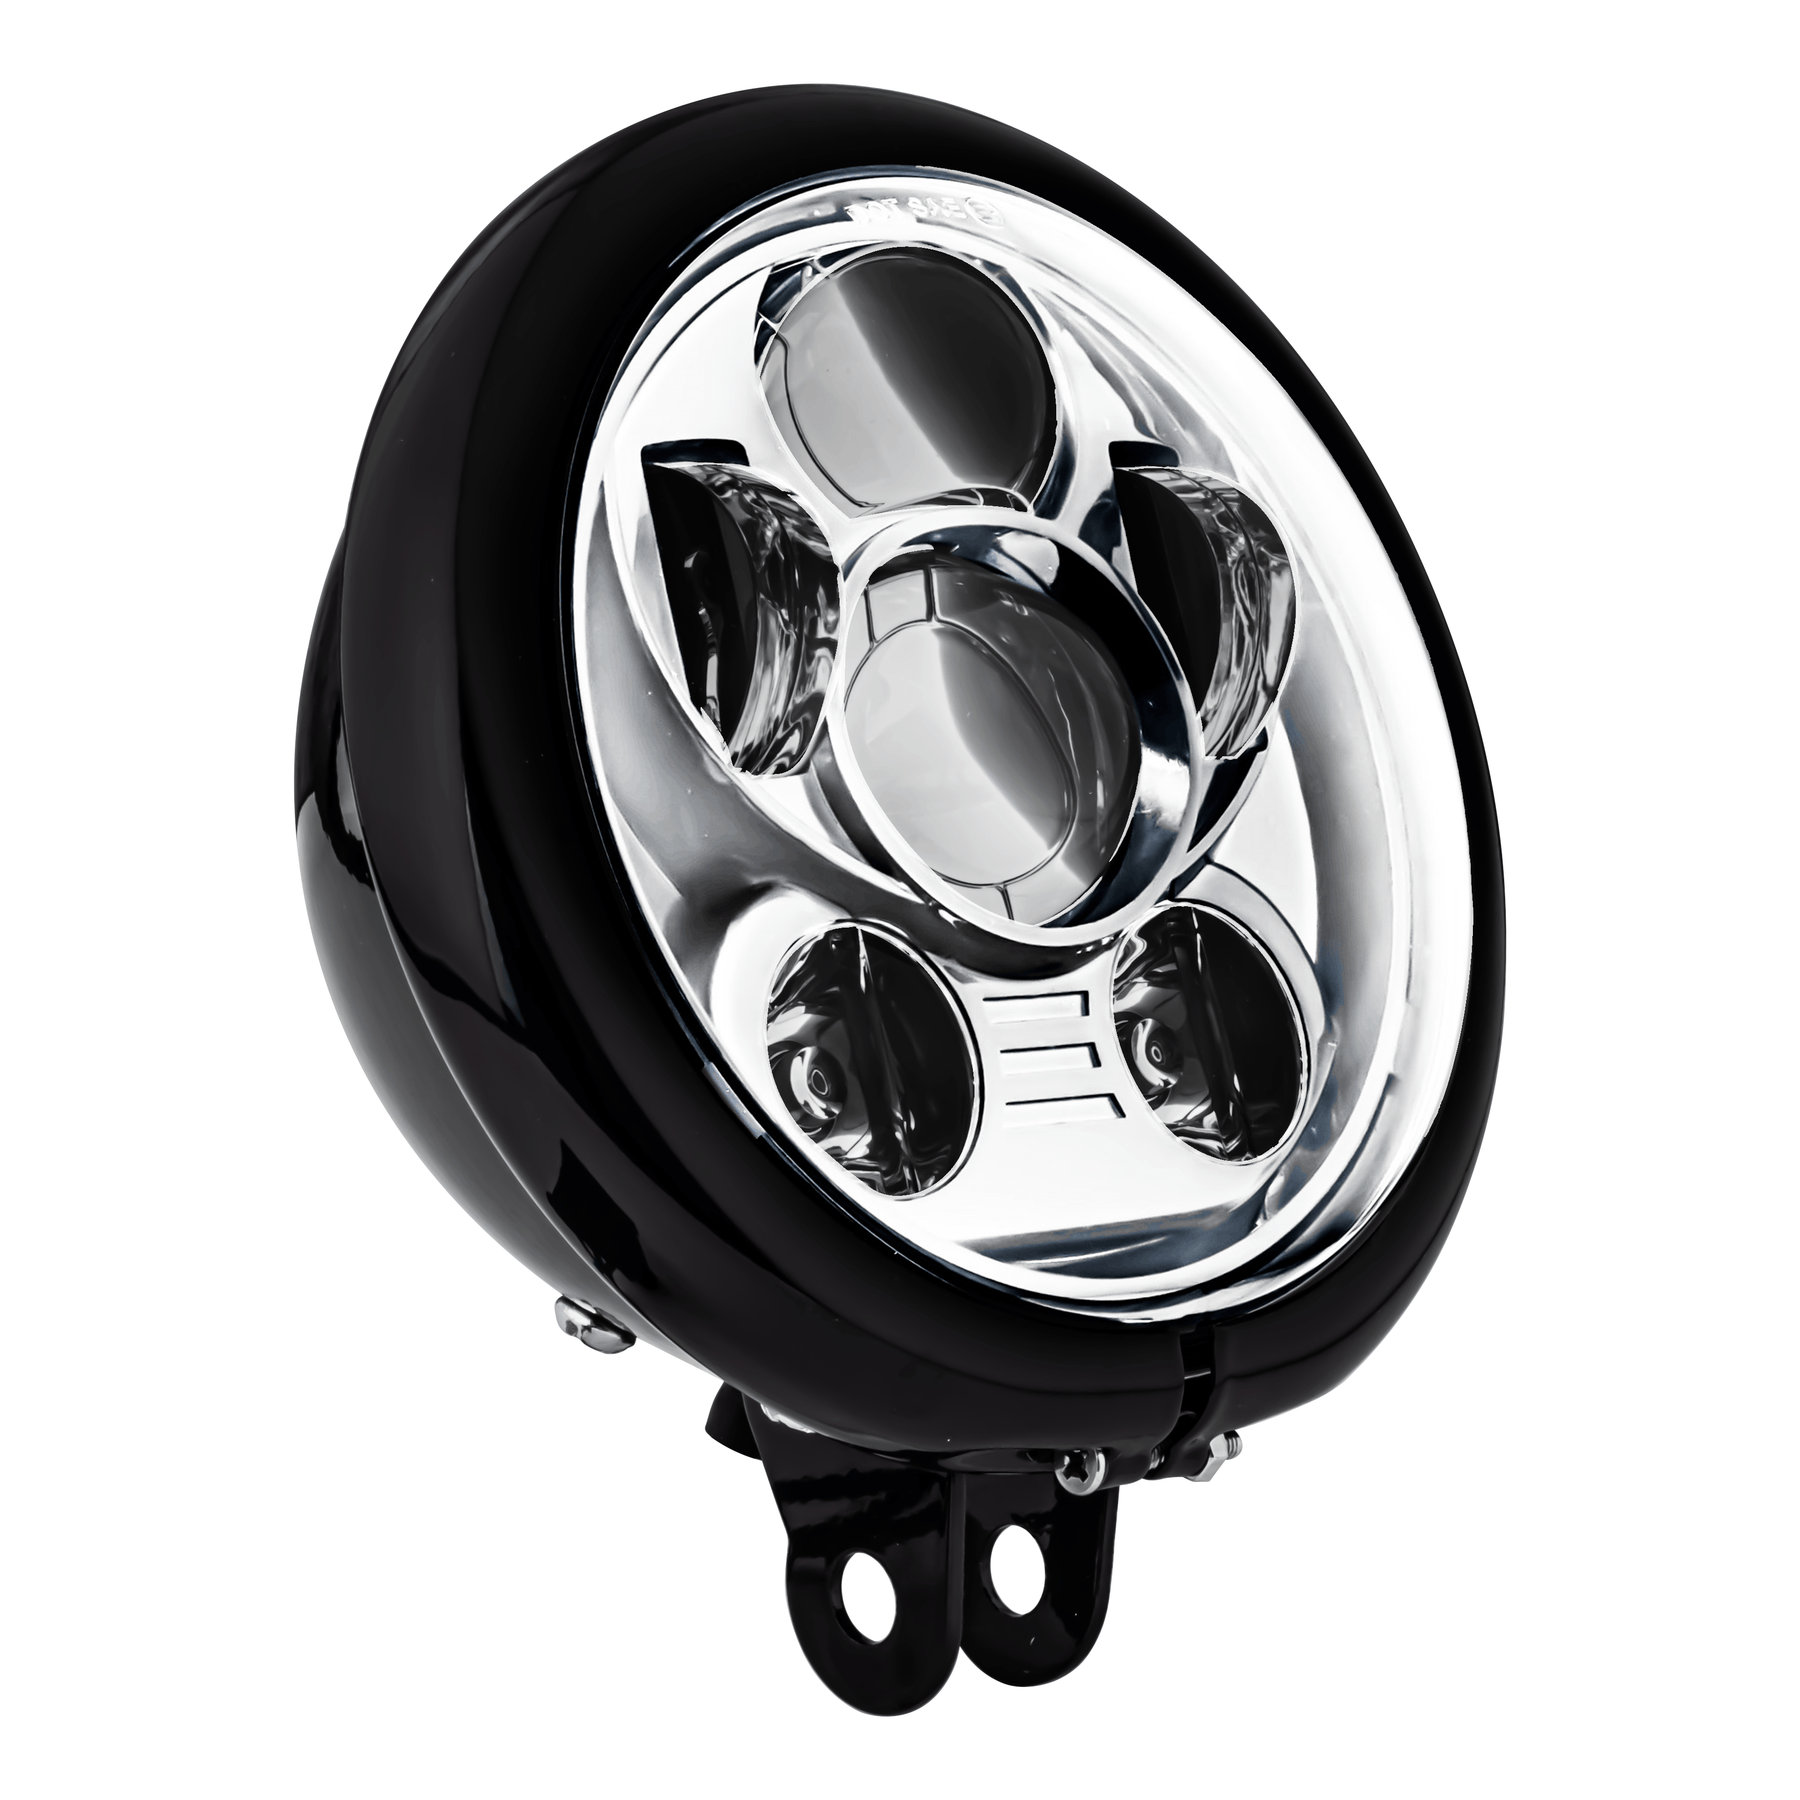 Eagle Lights 5 3/4" LED Headlight Kit for 2018 and Newer Harley Davidson Softail Models